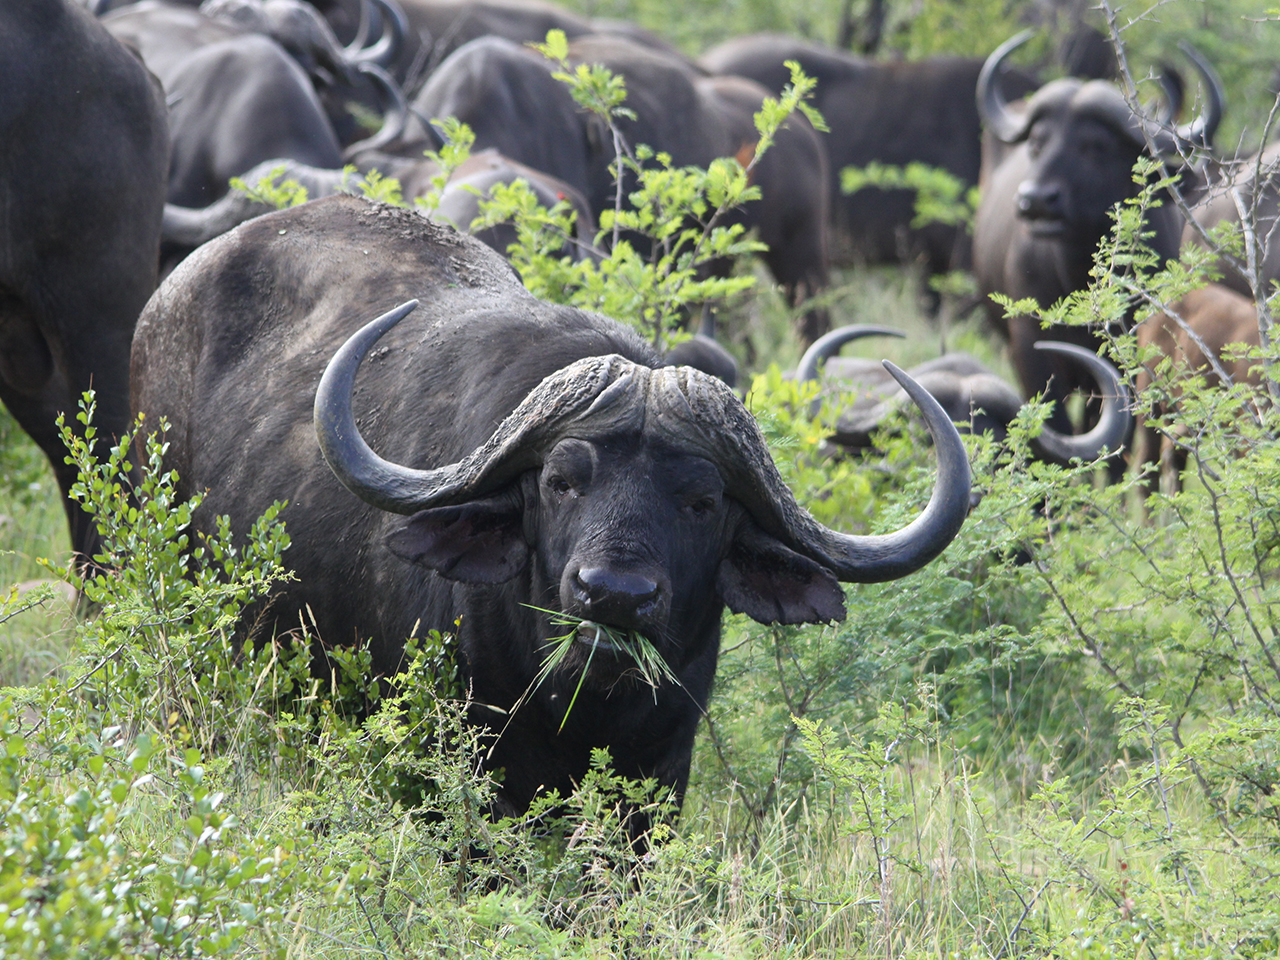 cape buffalo grazing in South Africa